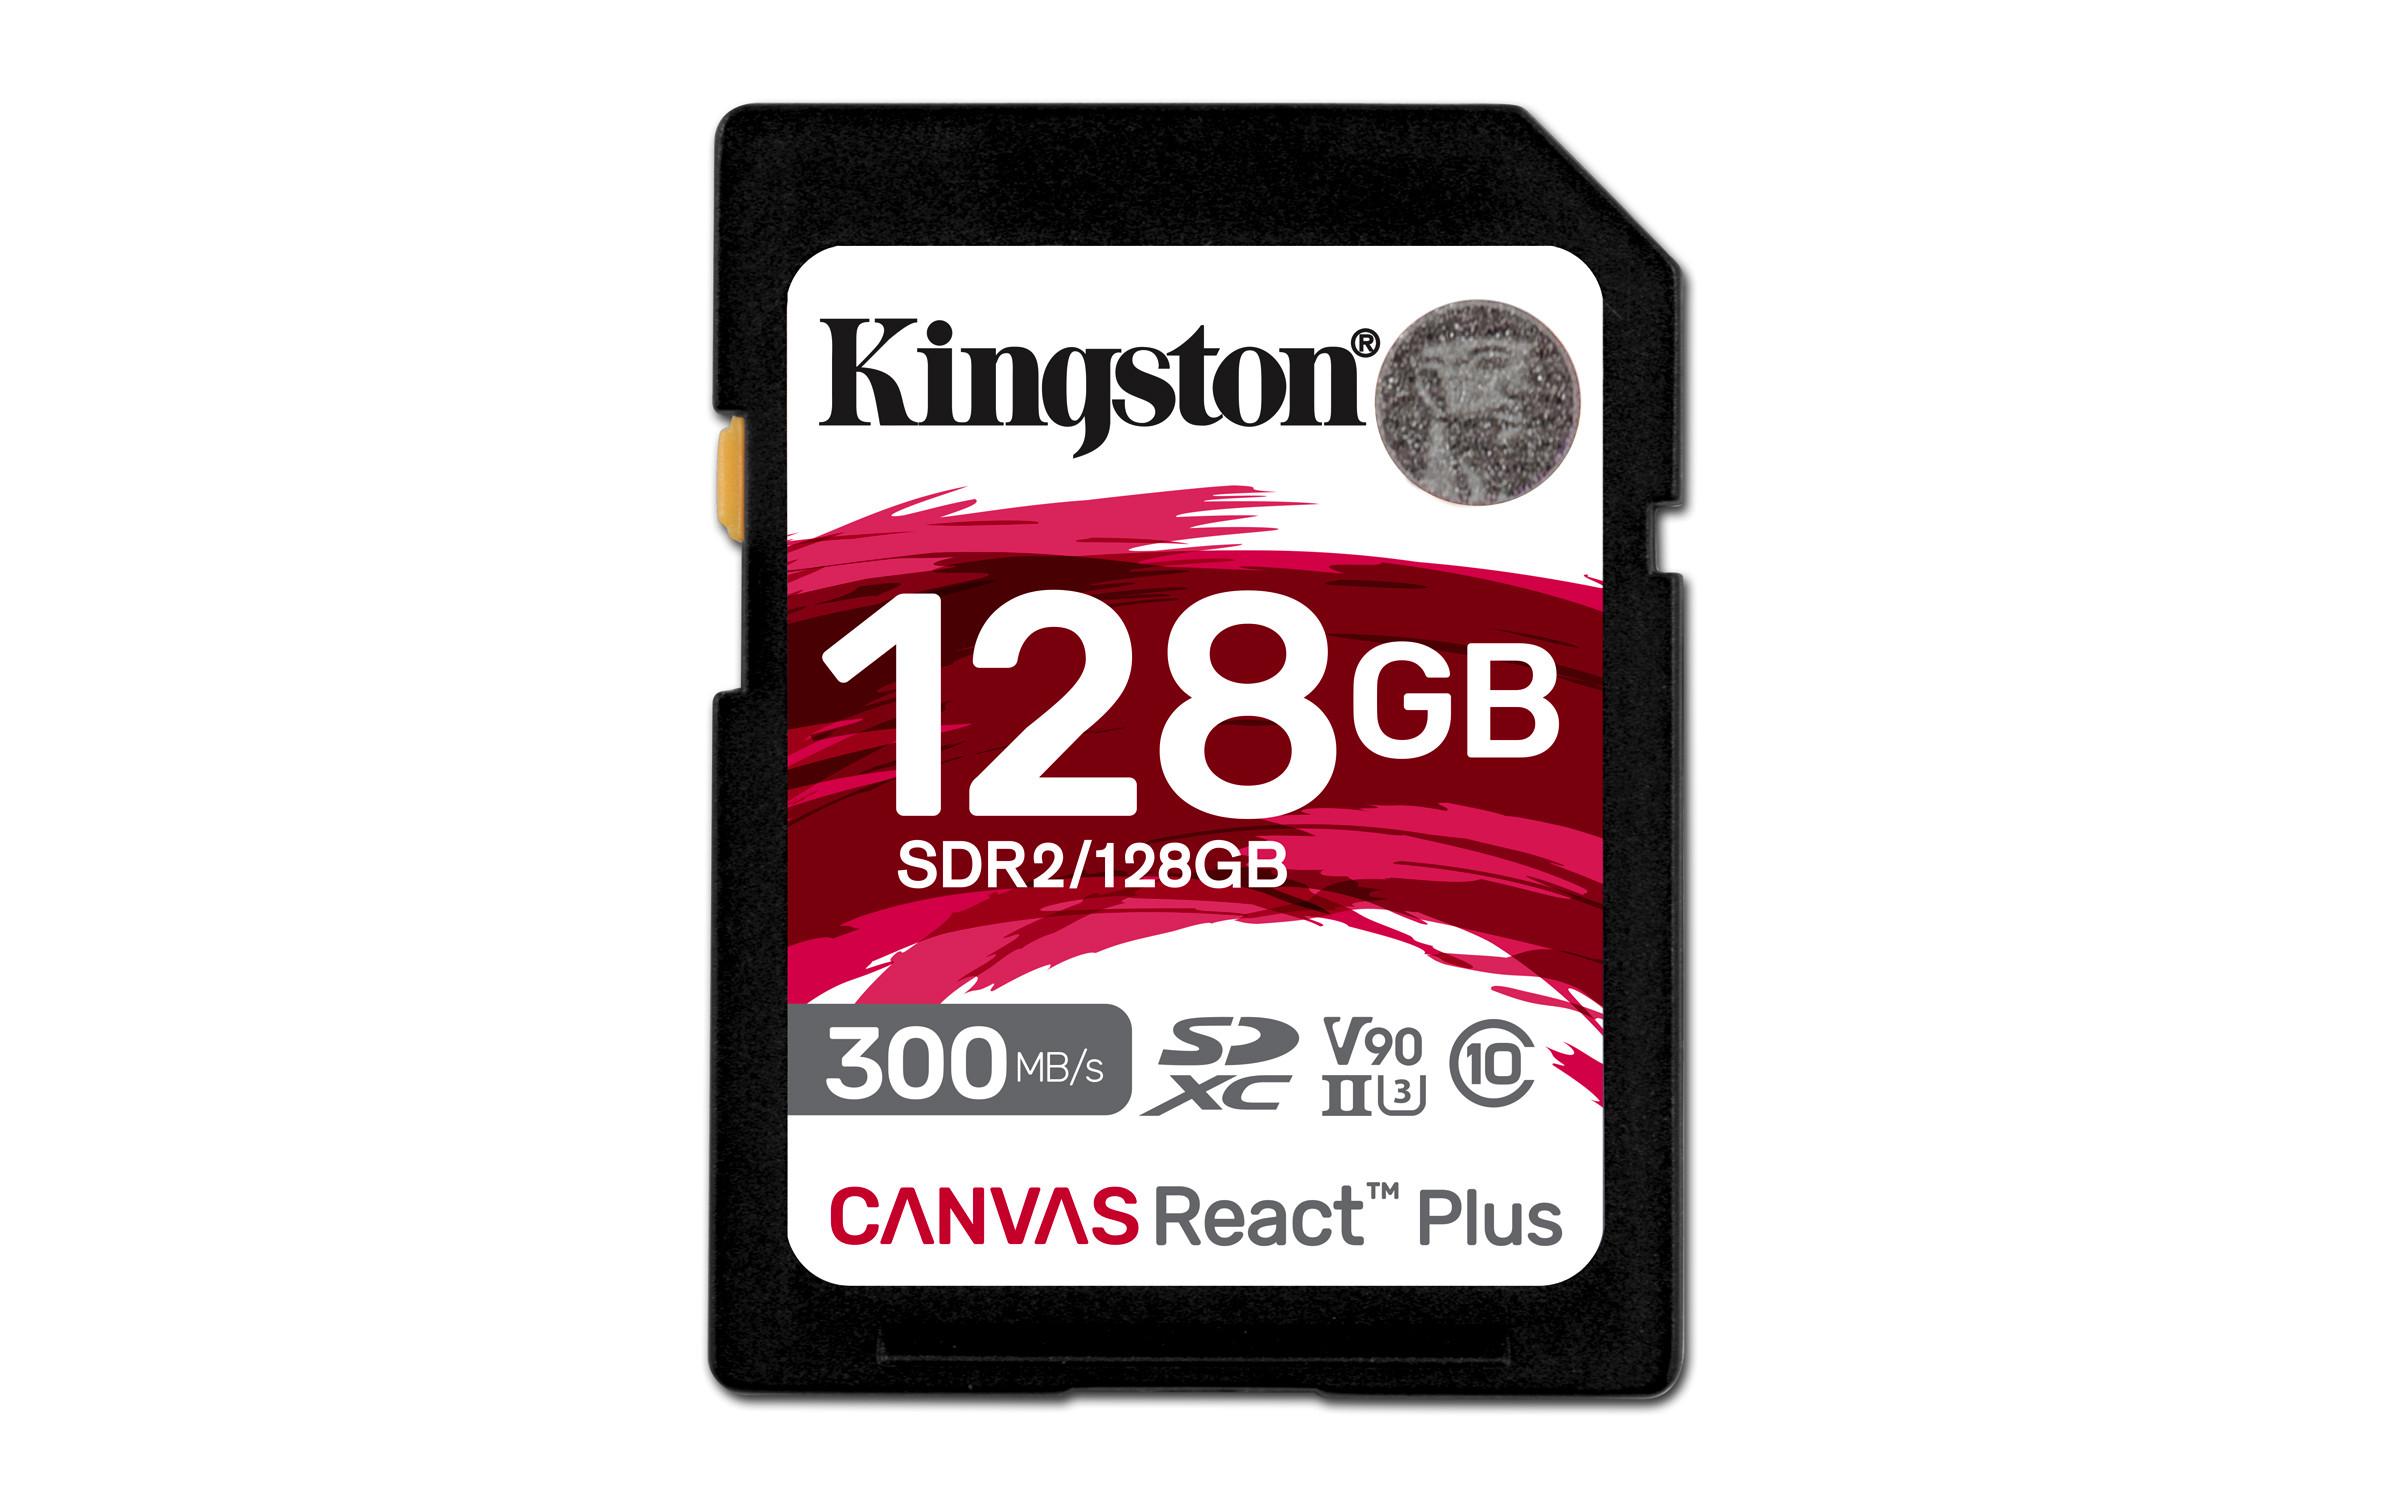 KINGSTON TECHNOLOGY  Kingston Technology 128GB Canvas React Plus SDXC UHS-II 300R/260W U3 V90 for Full HD/4K/8K 